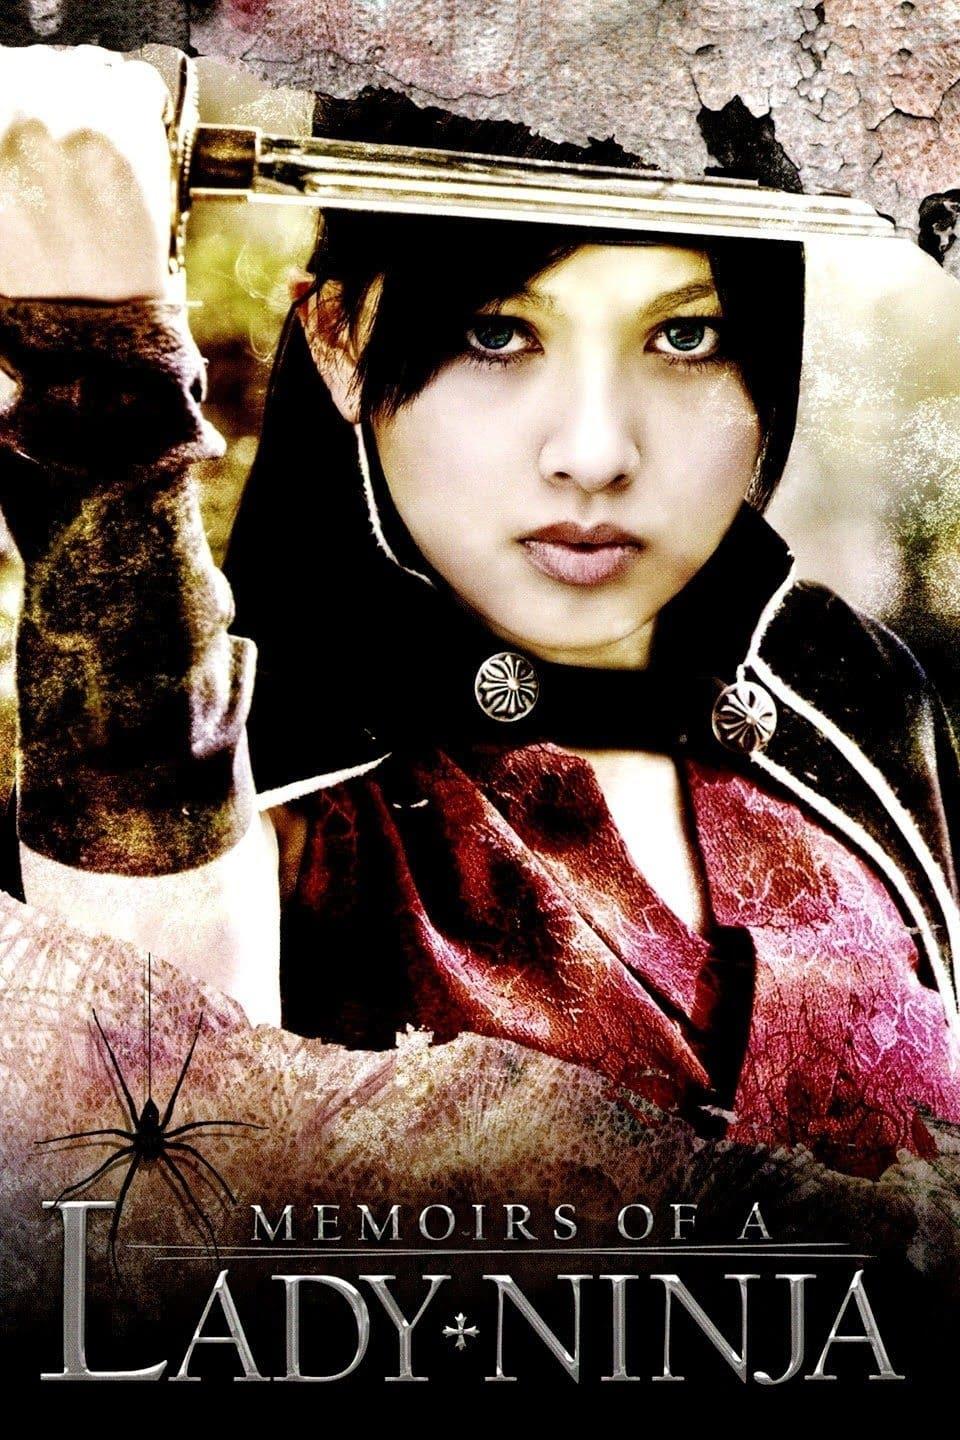 Memoirs of a Lady Ninja poster